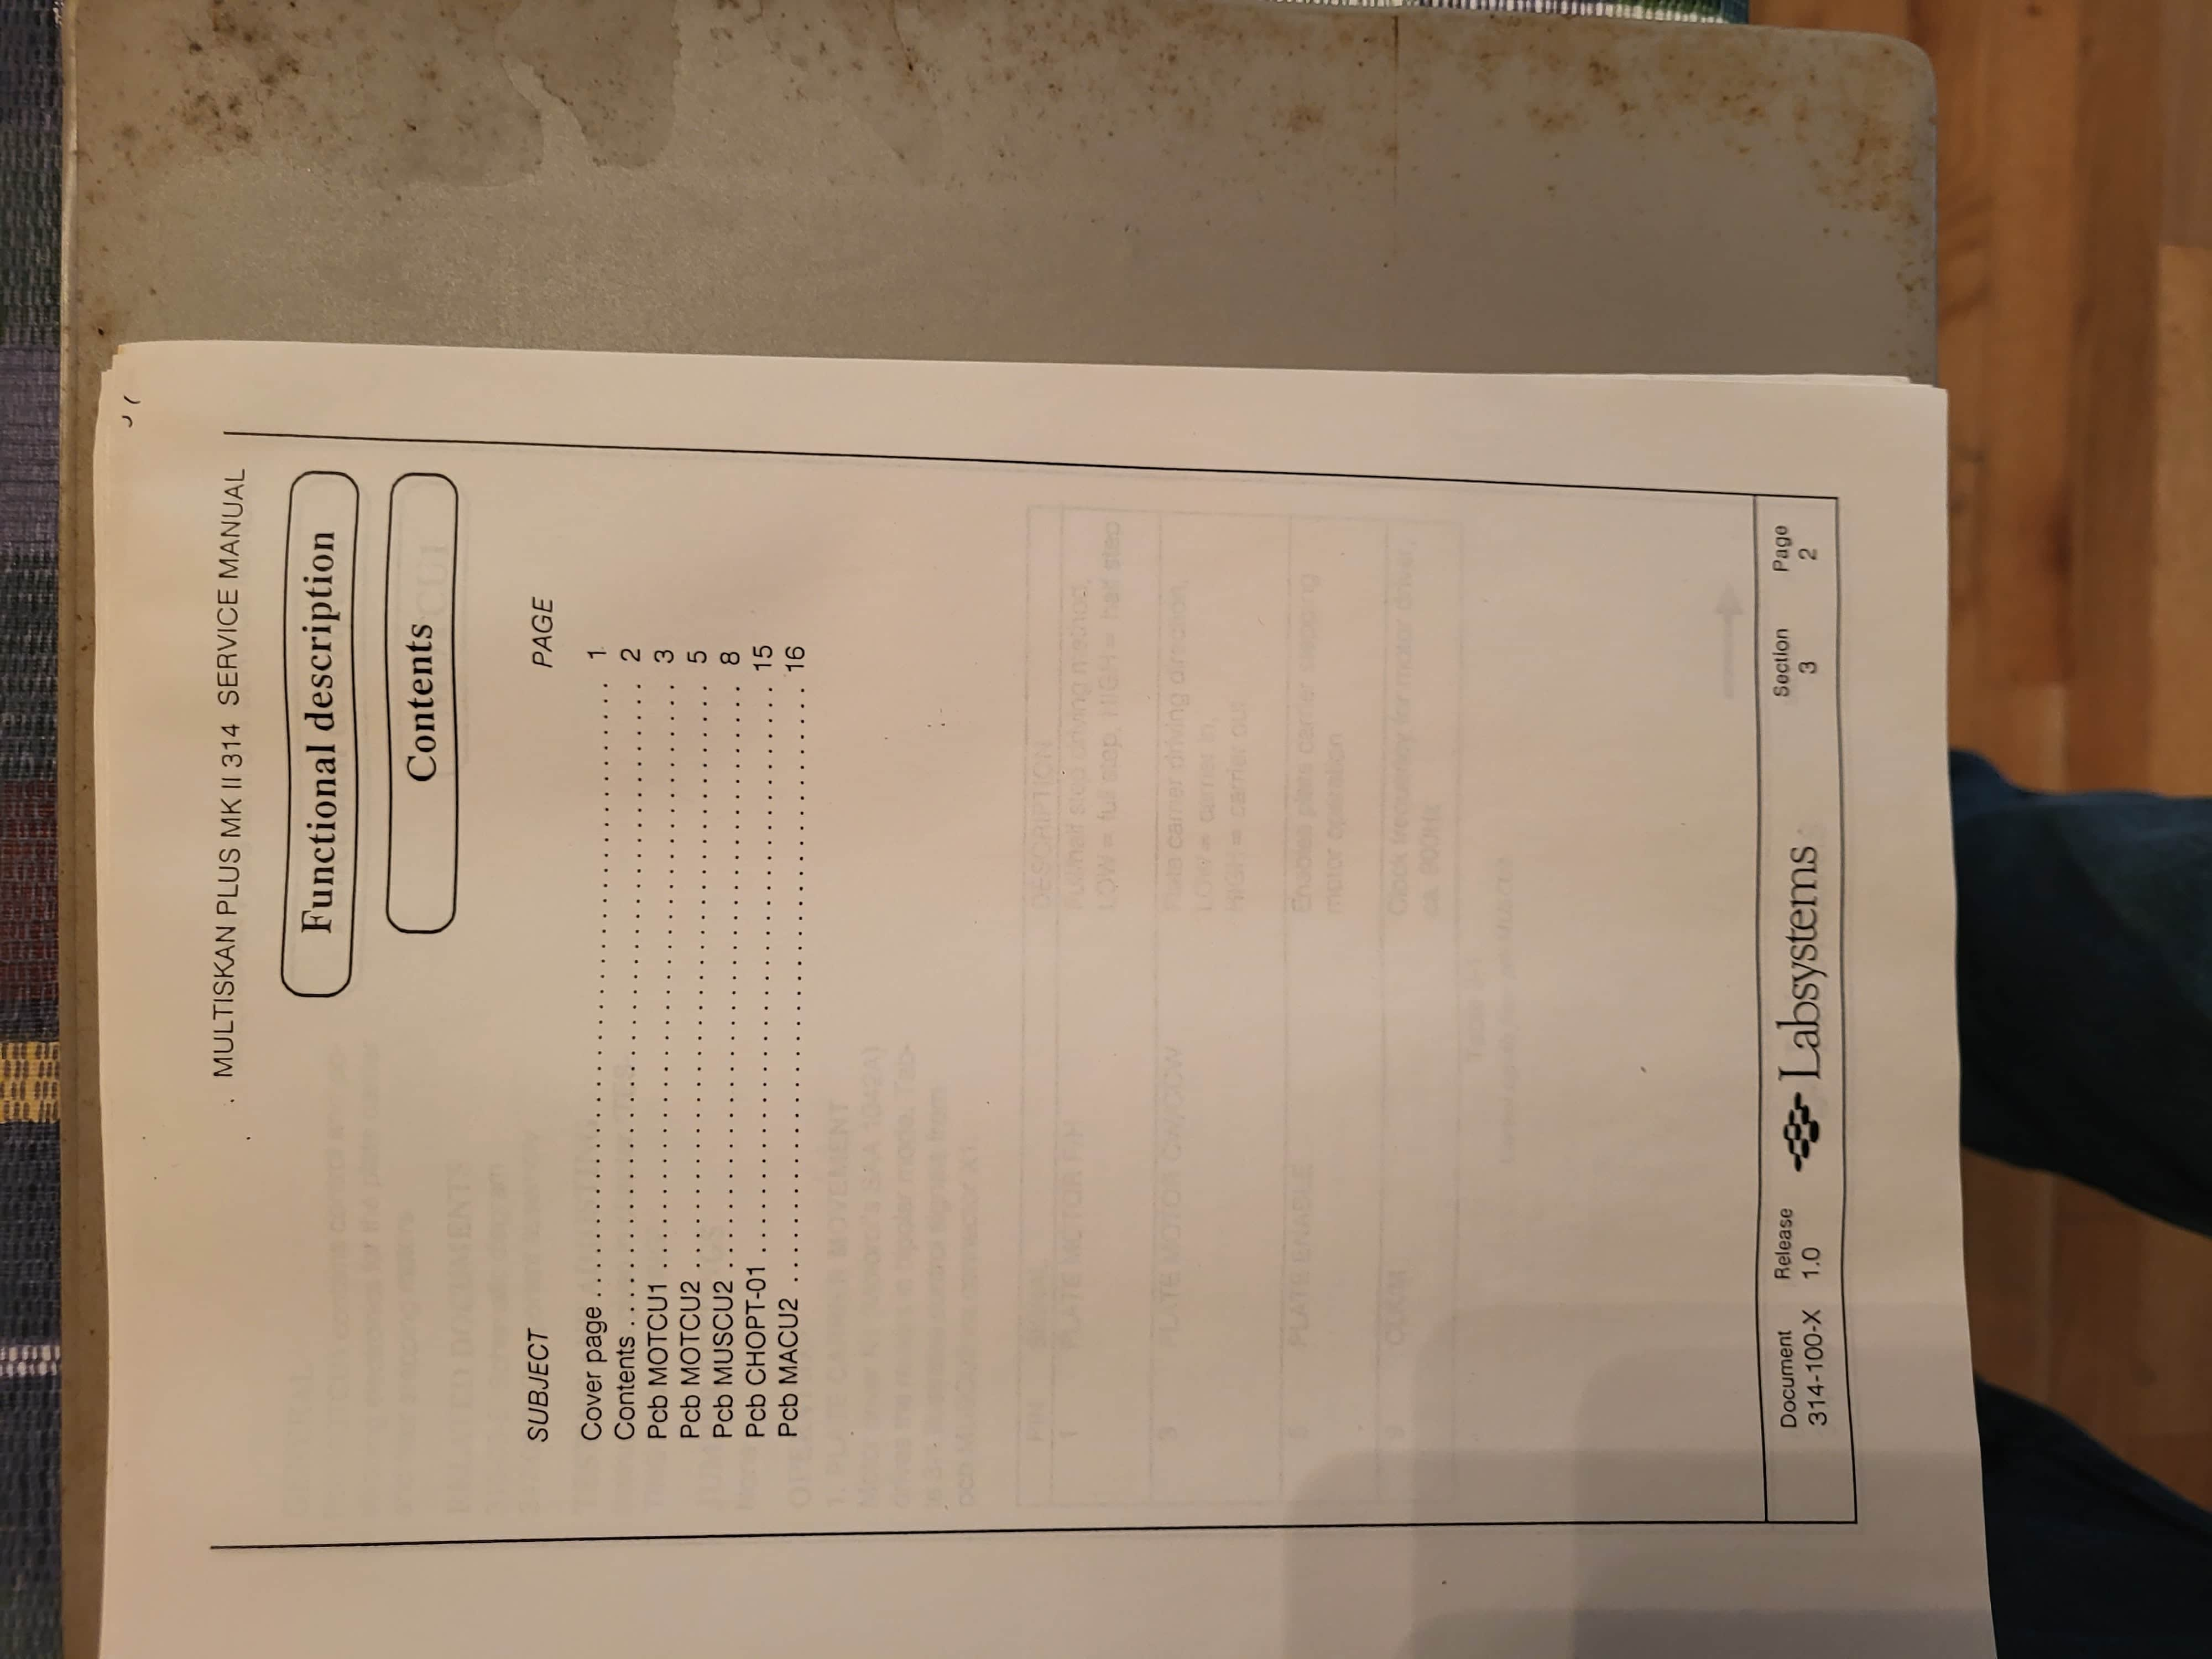 Service Manual for Titertek Plus MK II microplate reader